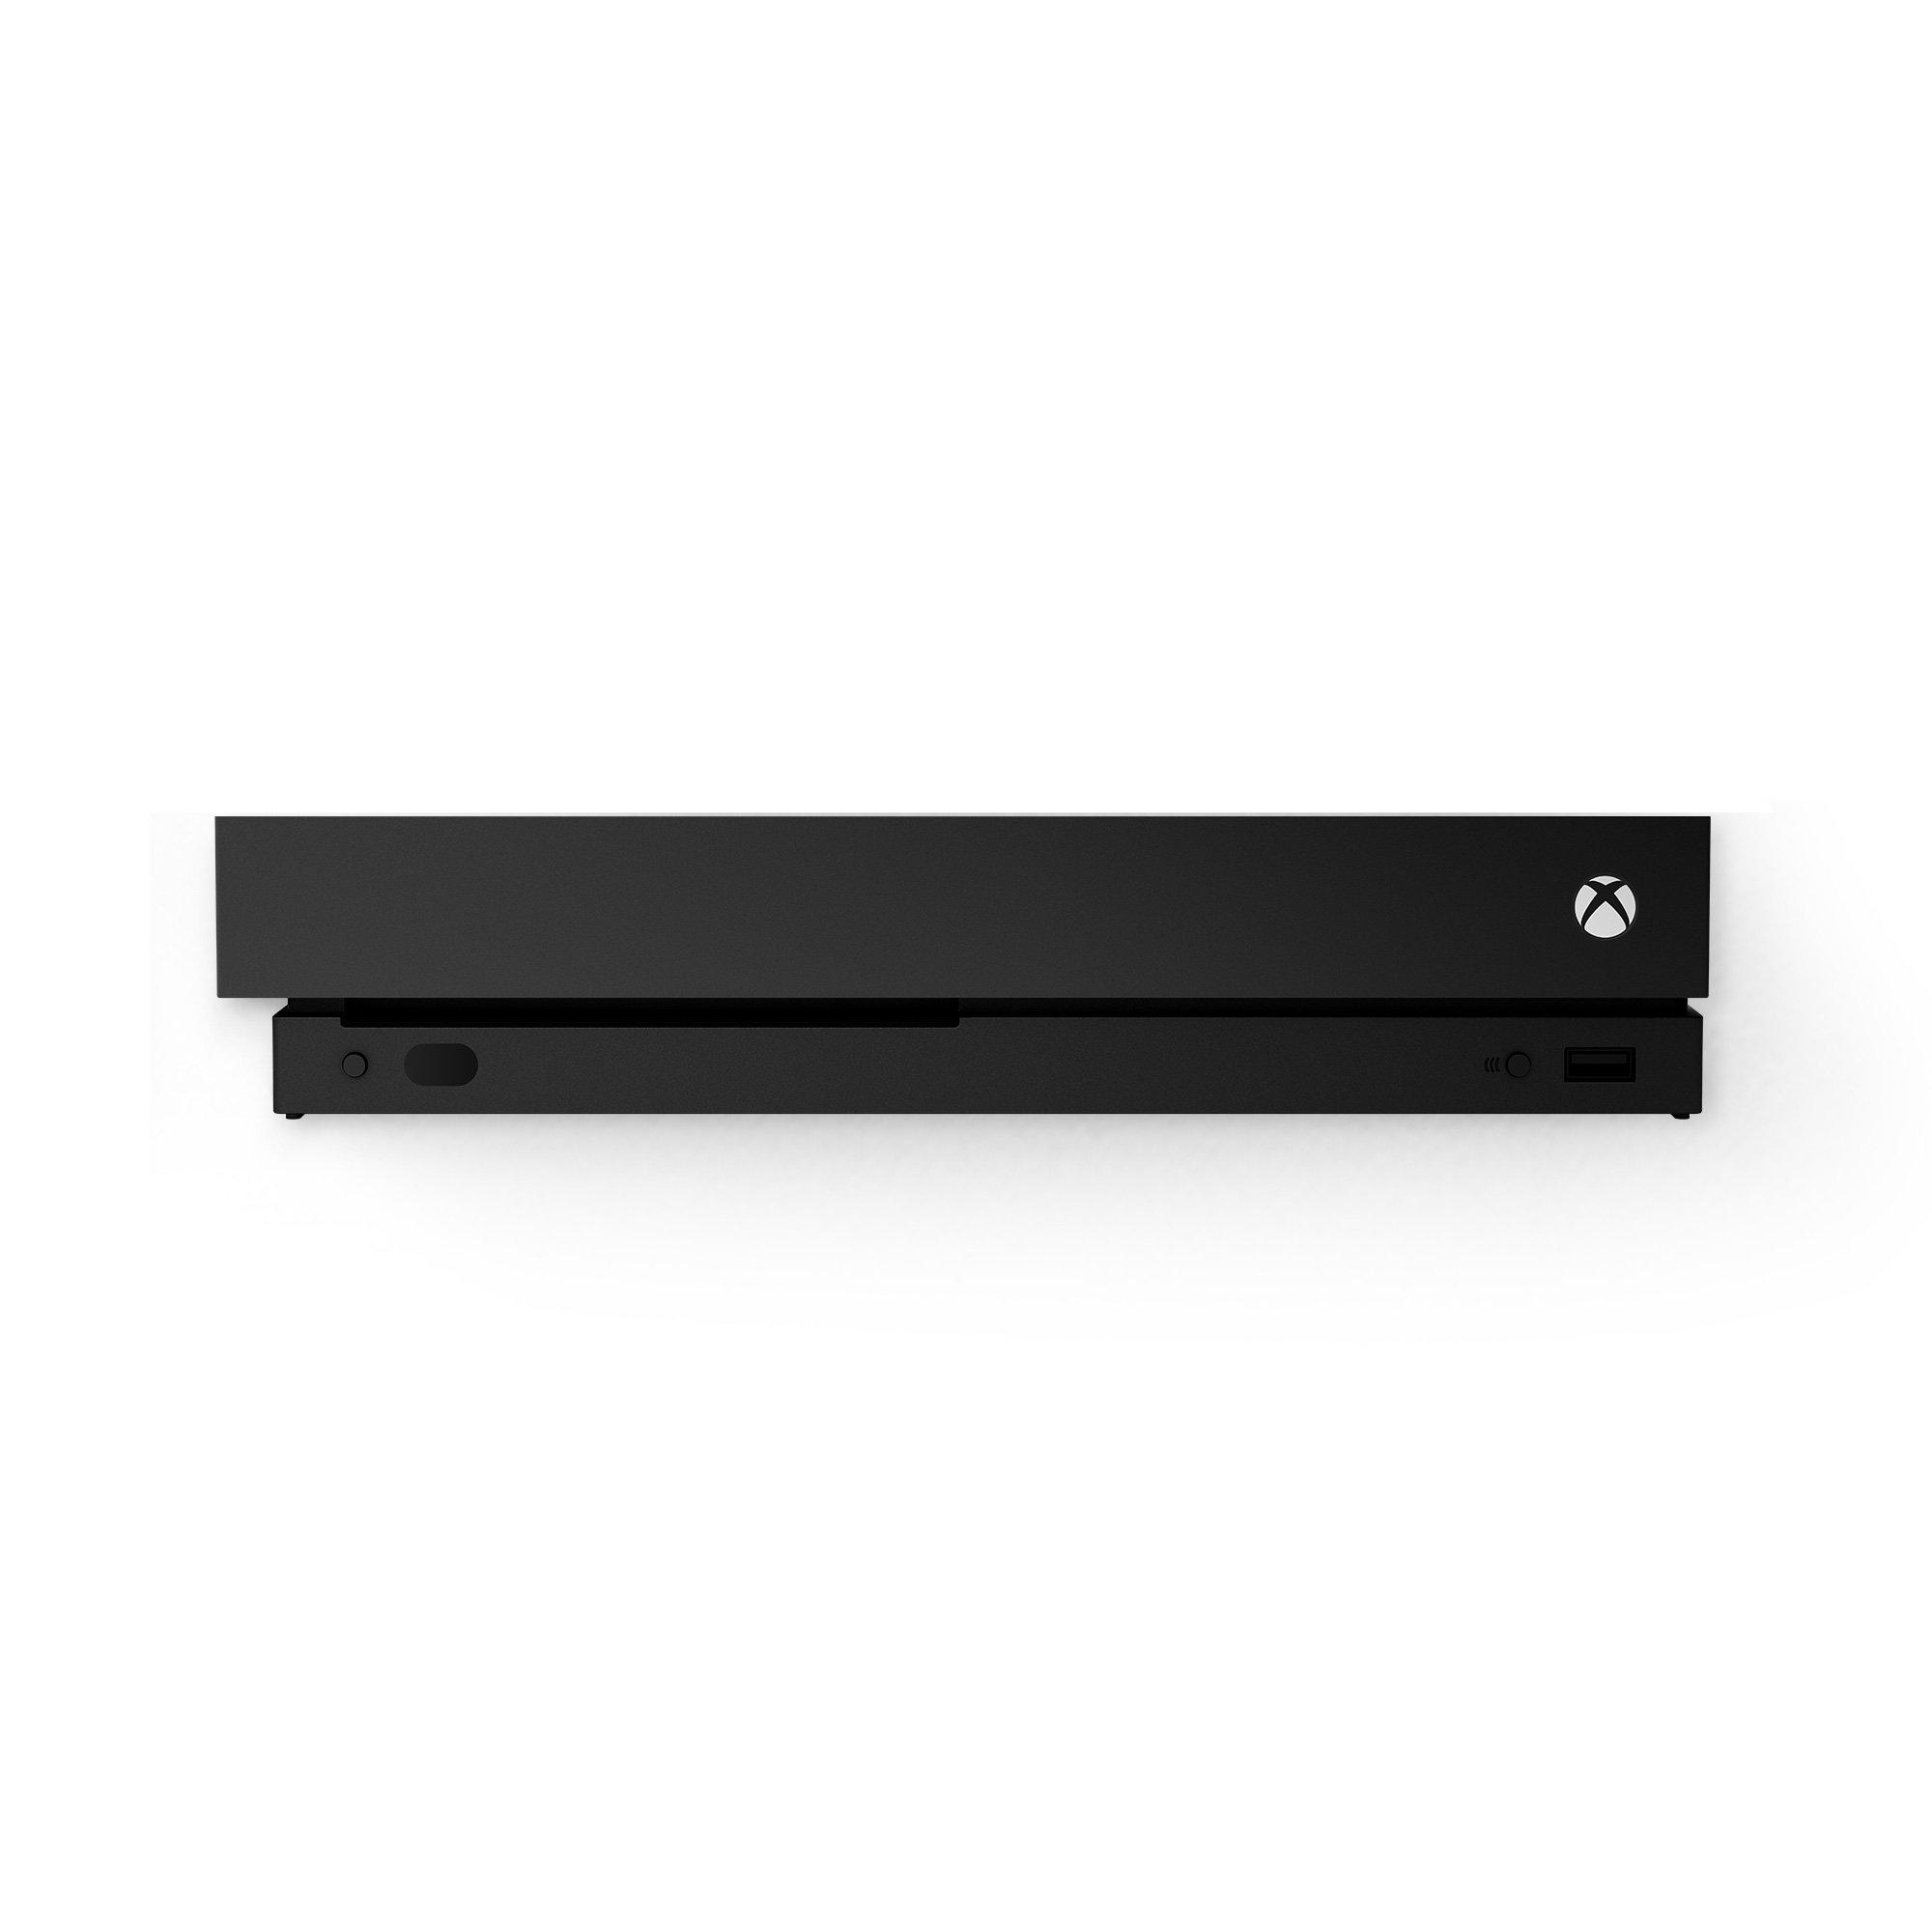 Microsoft Xbox One X 1TB Console Black